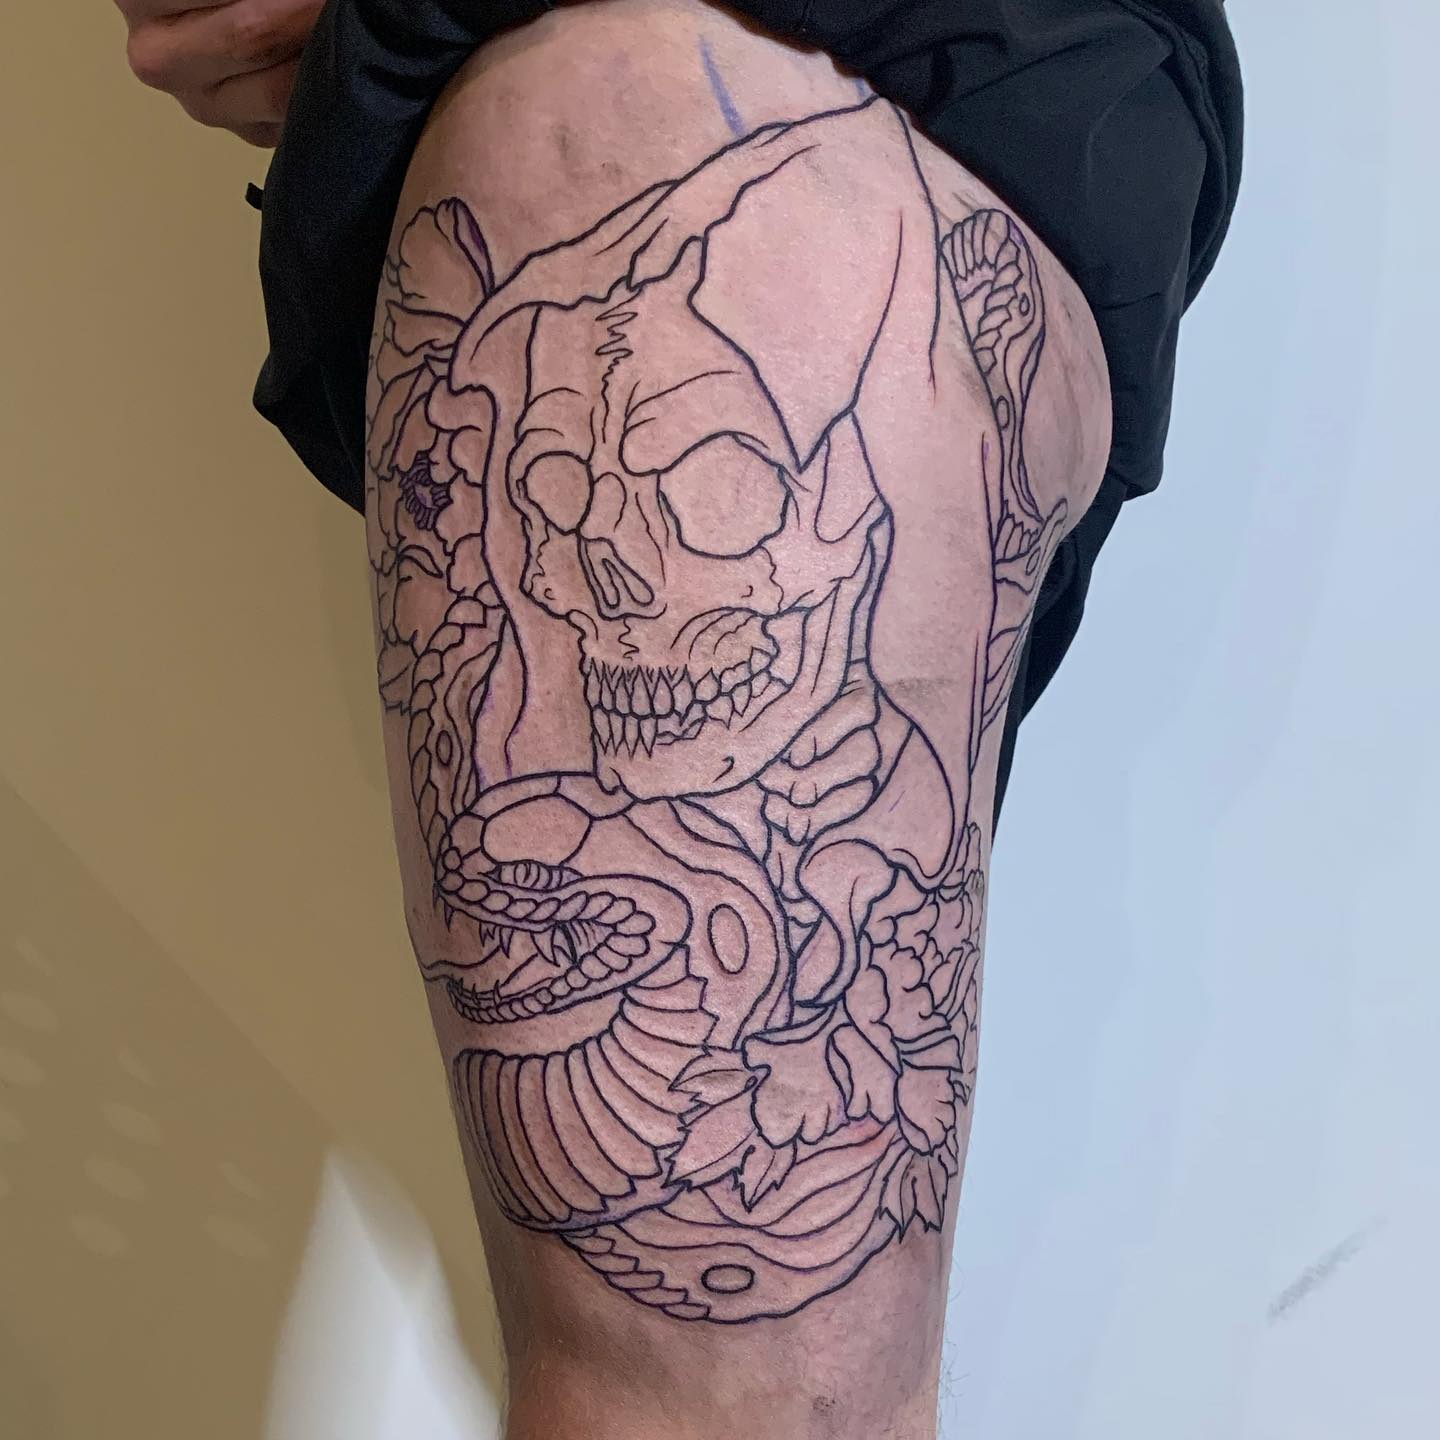 125+ Grim Reaper Tattoos You Should Consider - Wild Tattoo Art